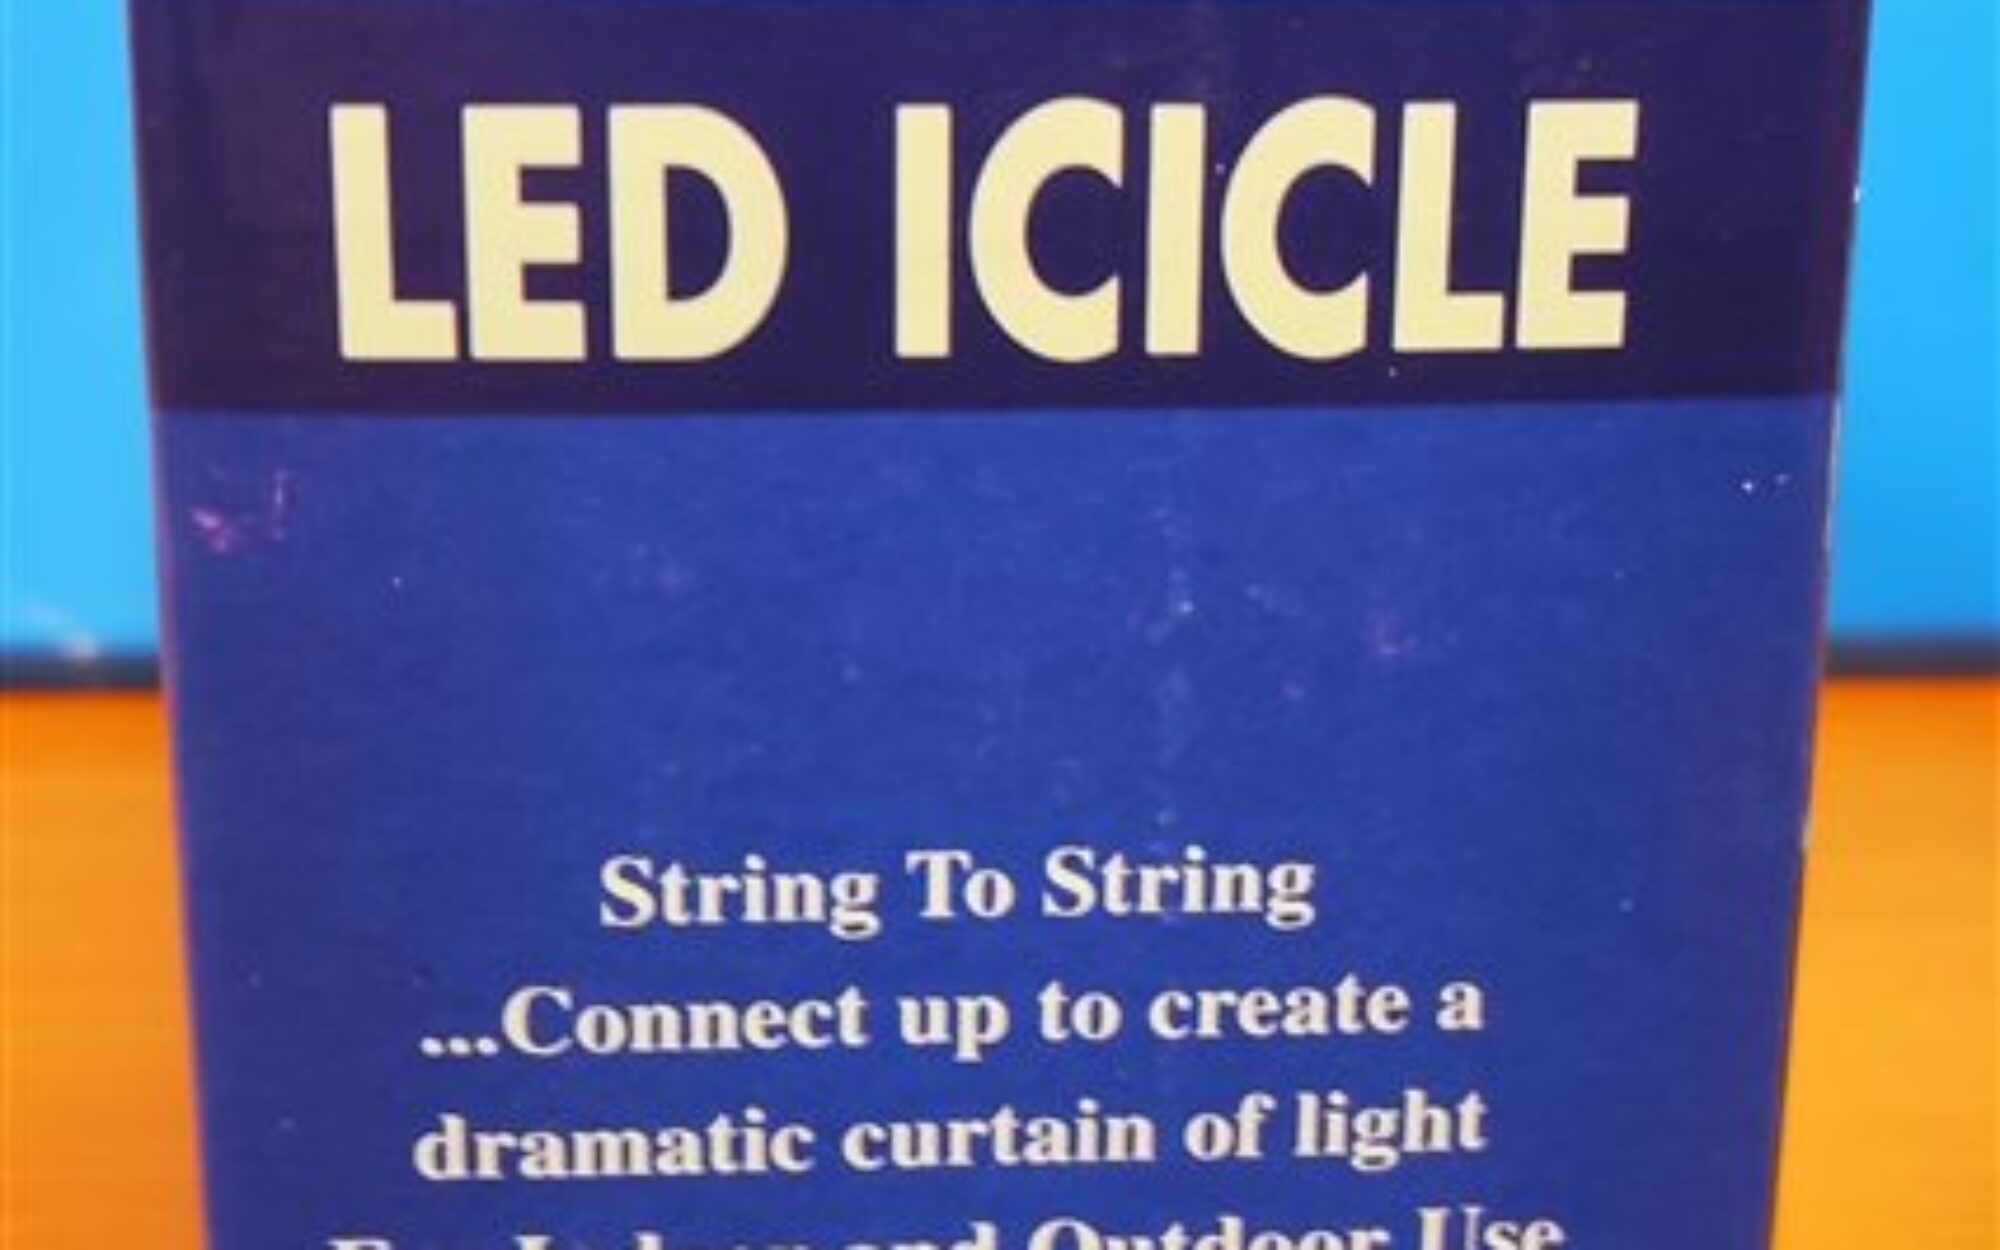 Svetelný reťazec "LED ICICLE LIGHT" item no.: 50048 (len na krabici).